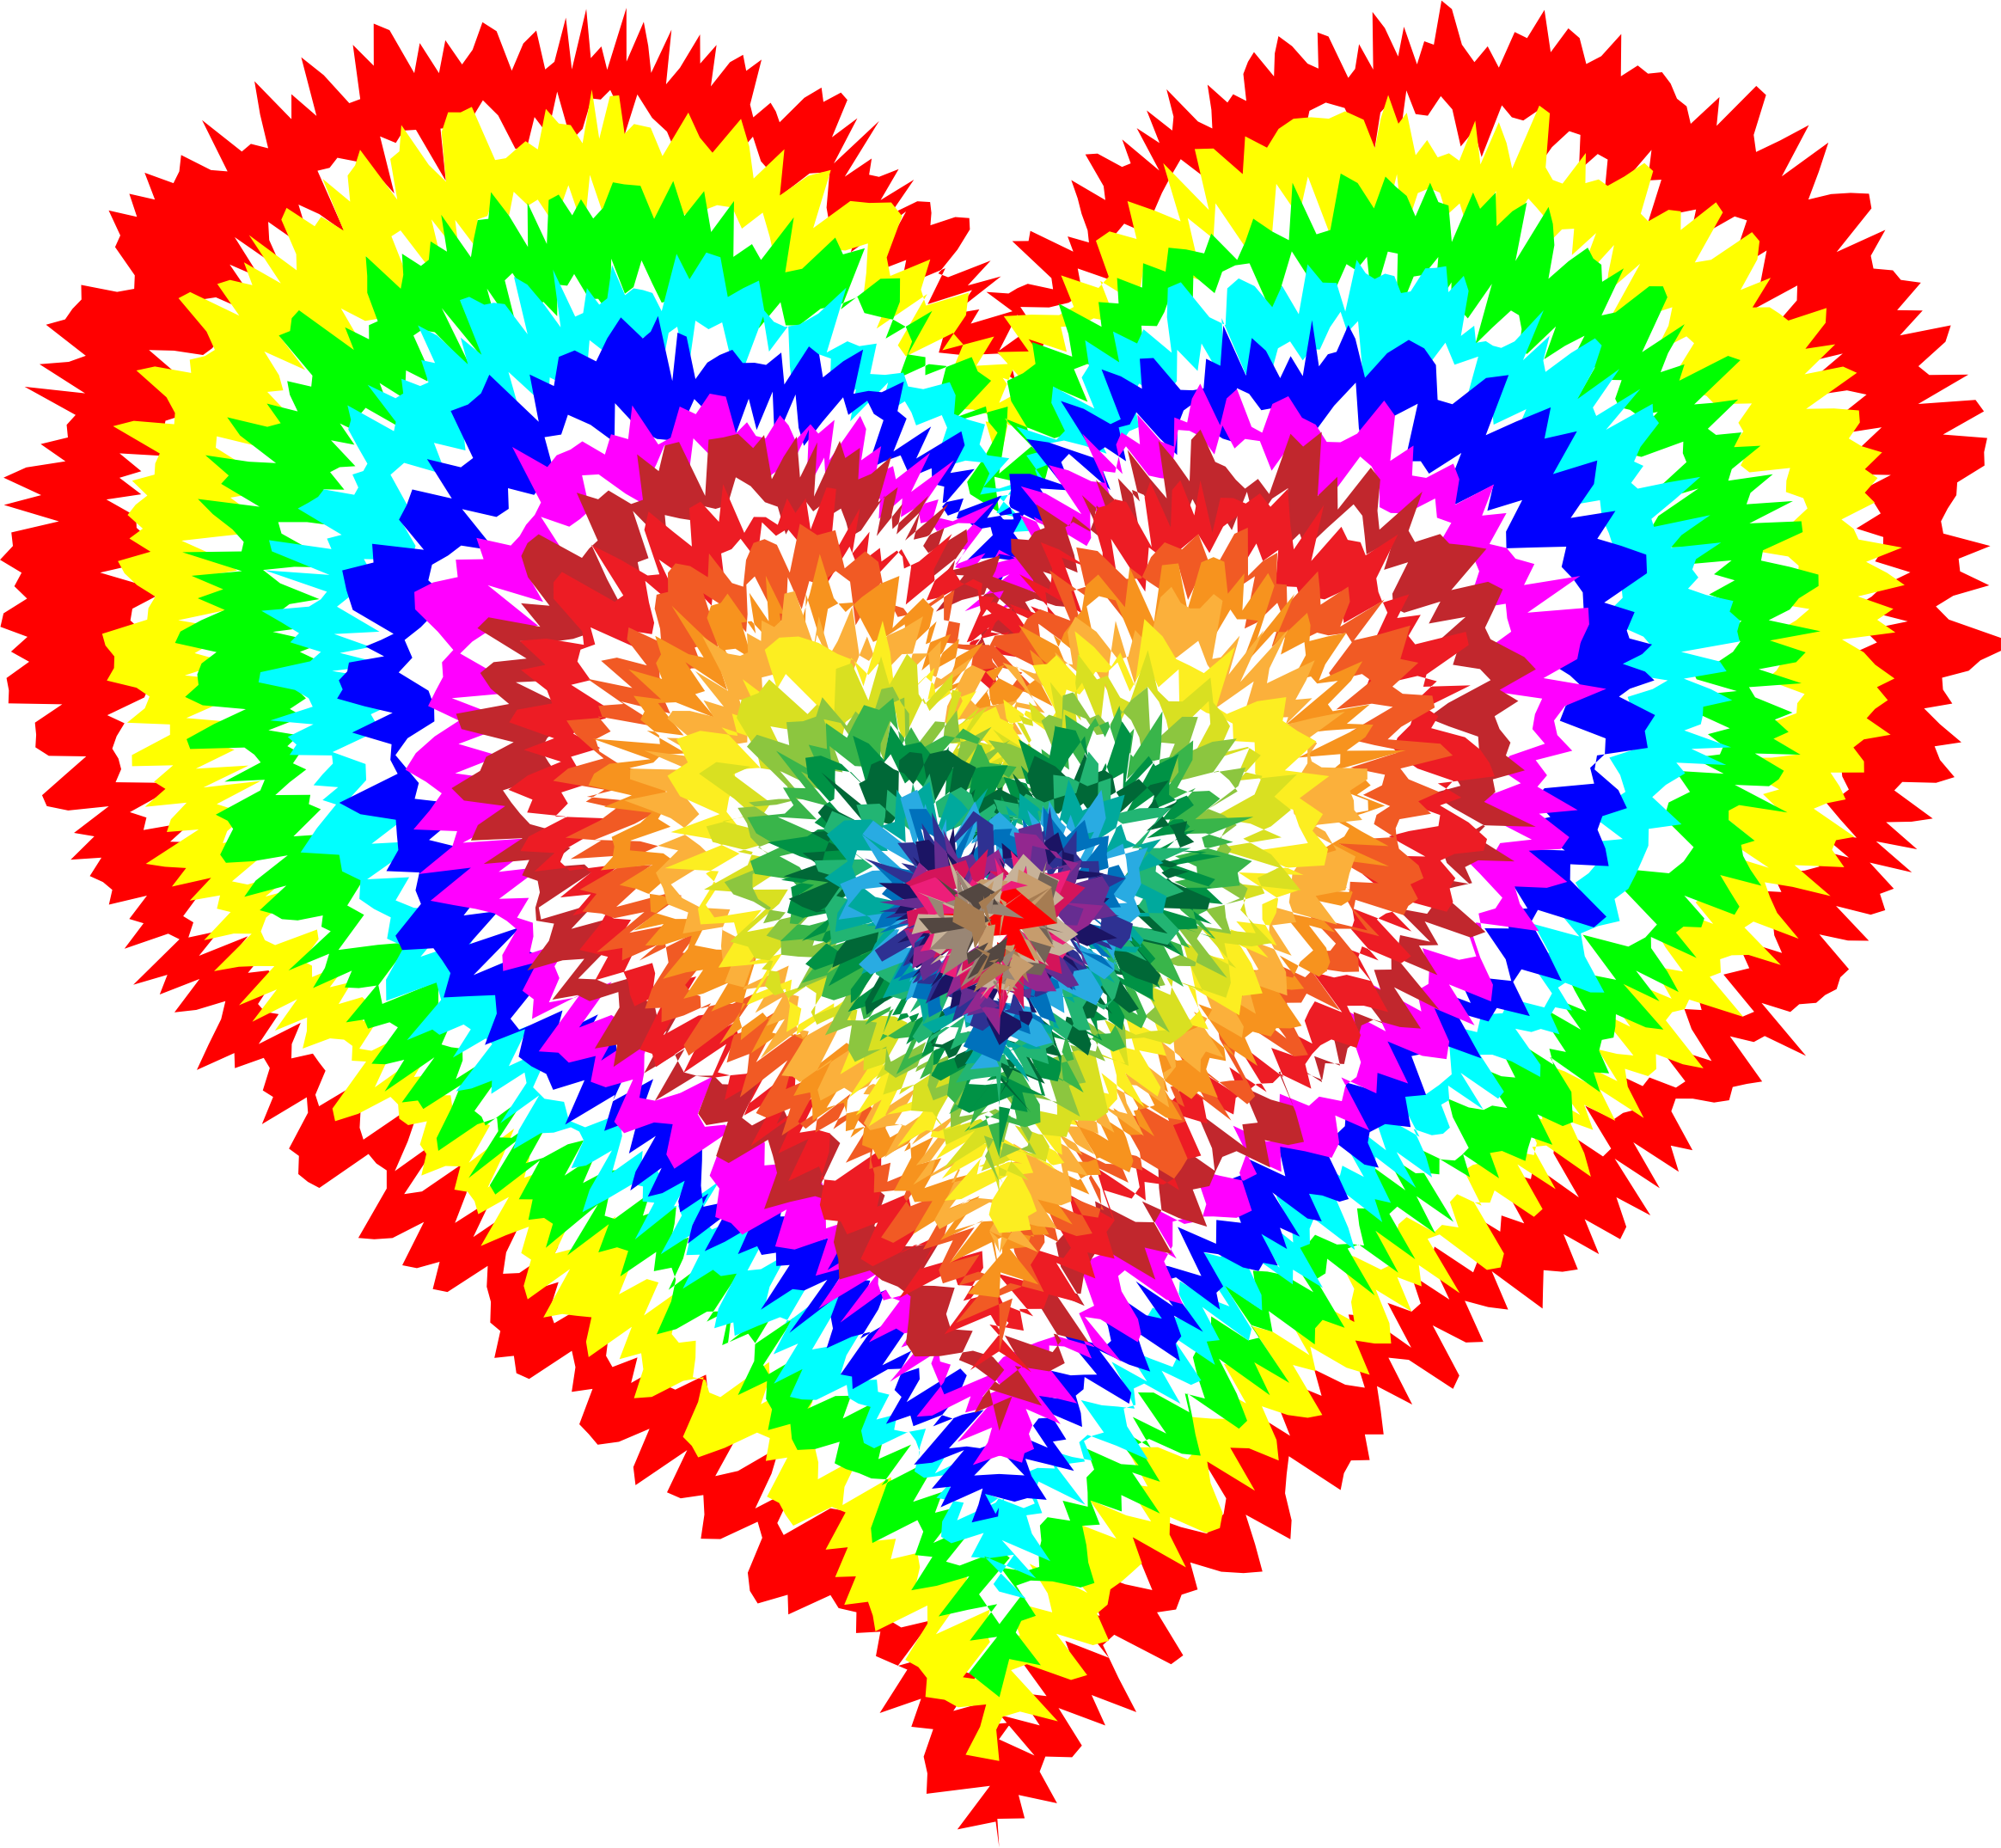 Medium Image - Tie Dye Love Heart (2328x2150)